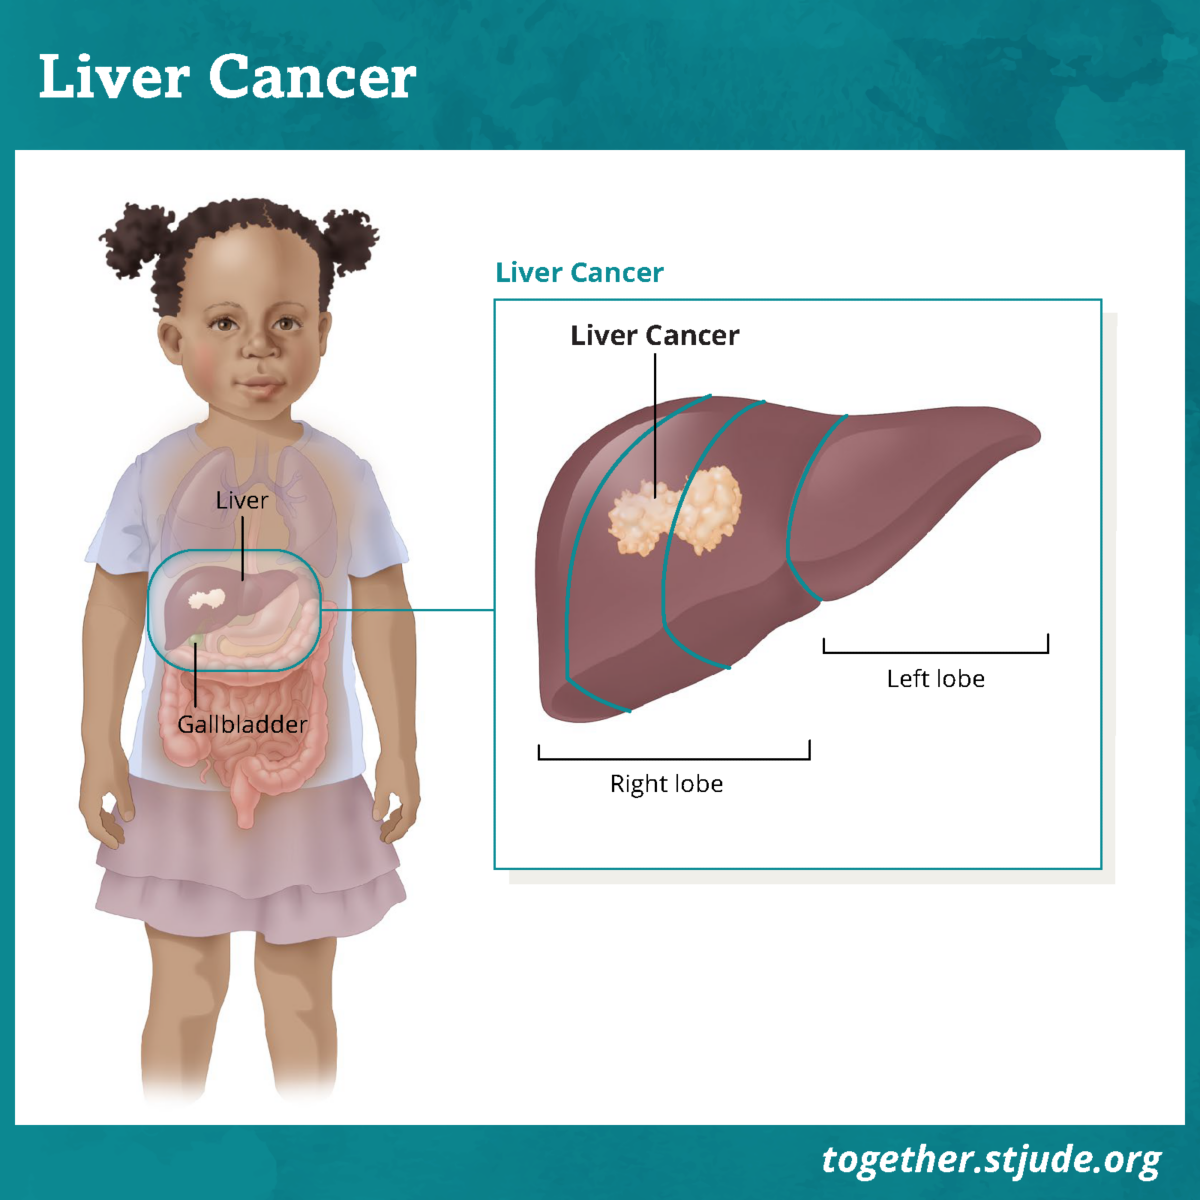 sarcoma cancer liver conține paraziți și transfer de gene orizontal